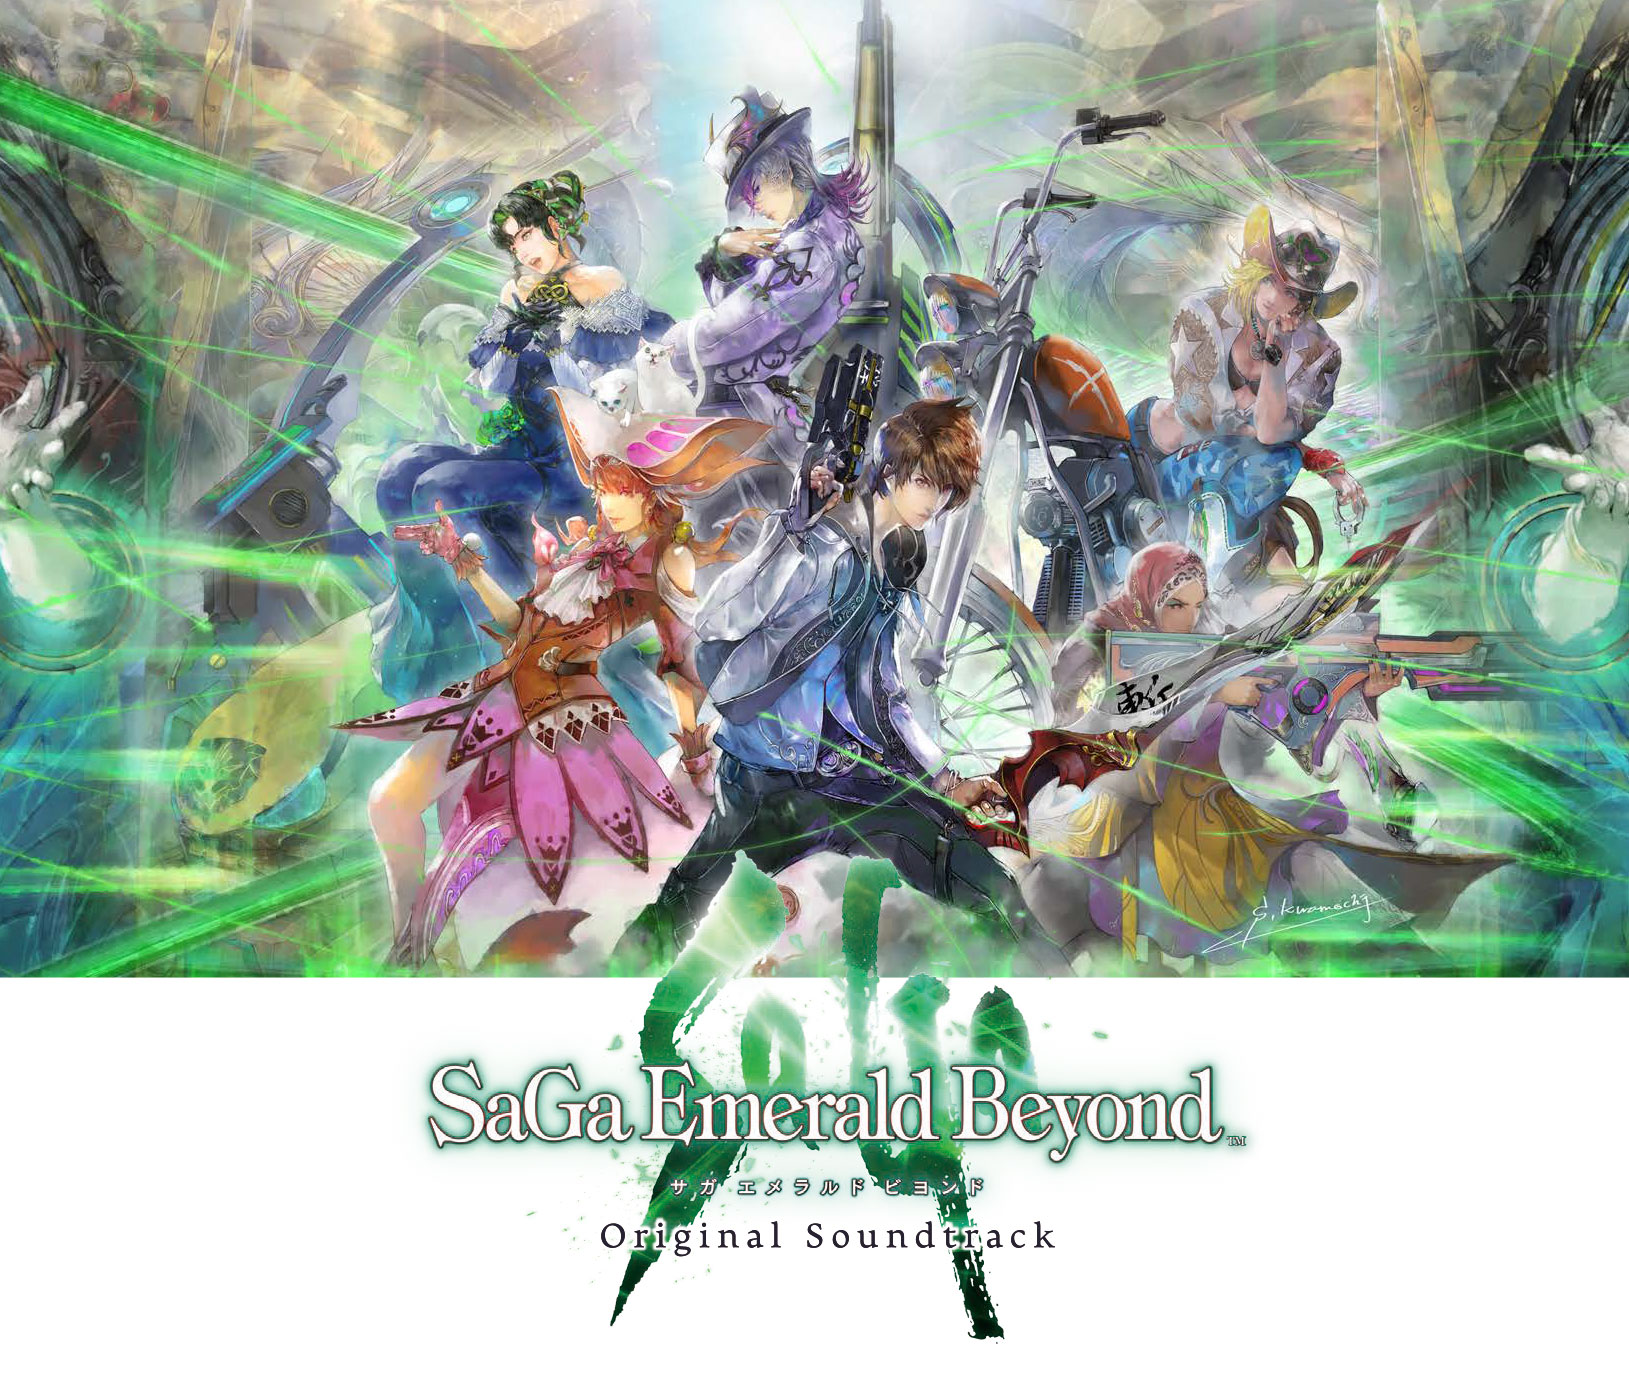 saga-emerald-beyond-soundtrack-release-date-3cd.jpeg